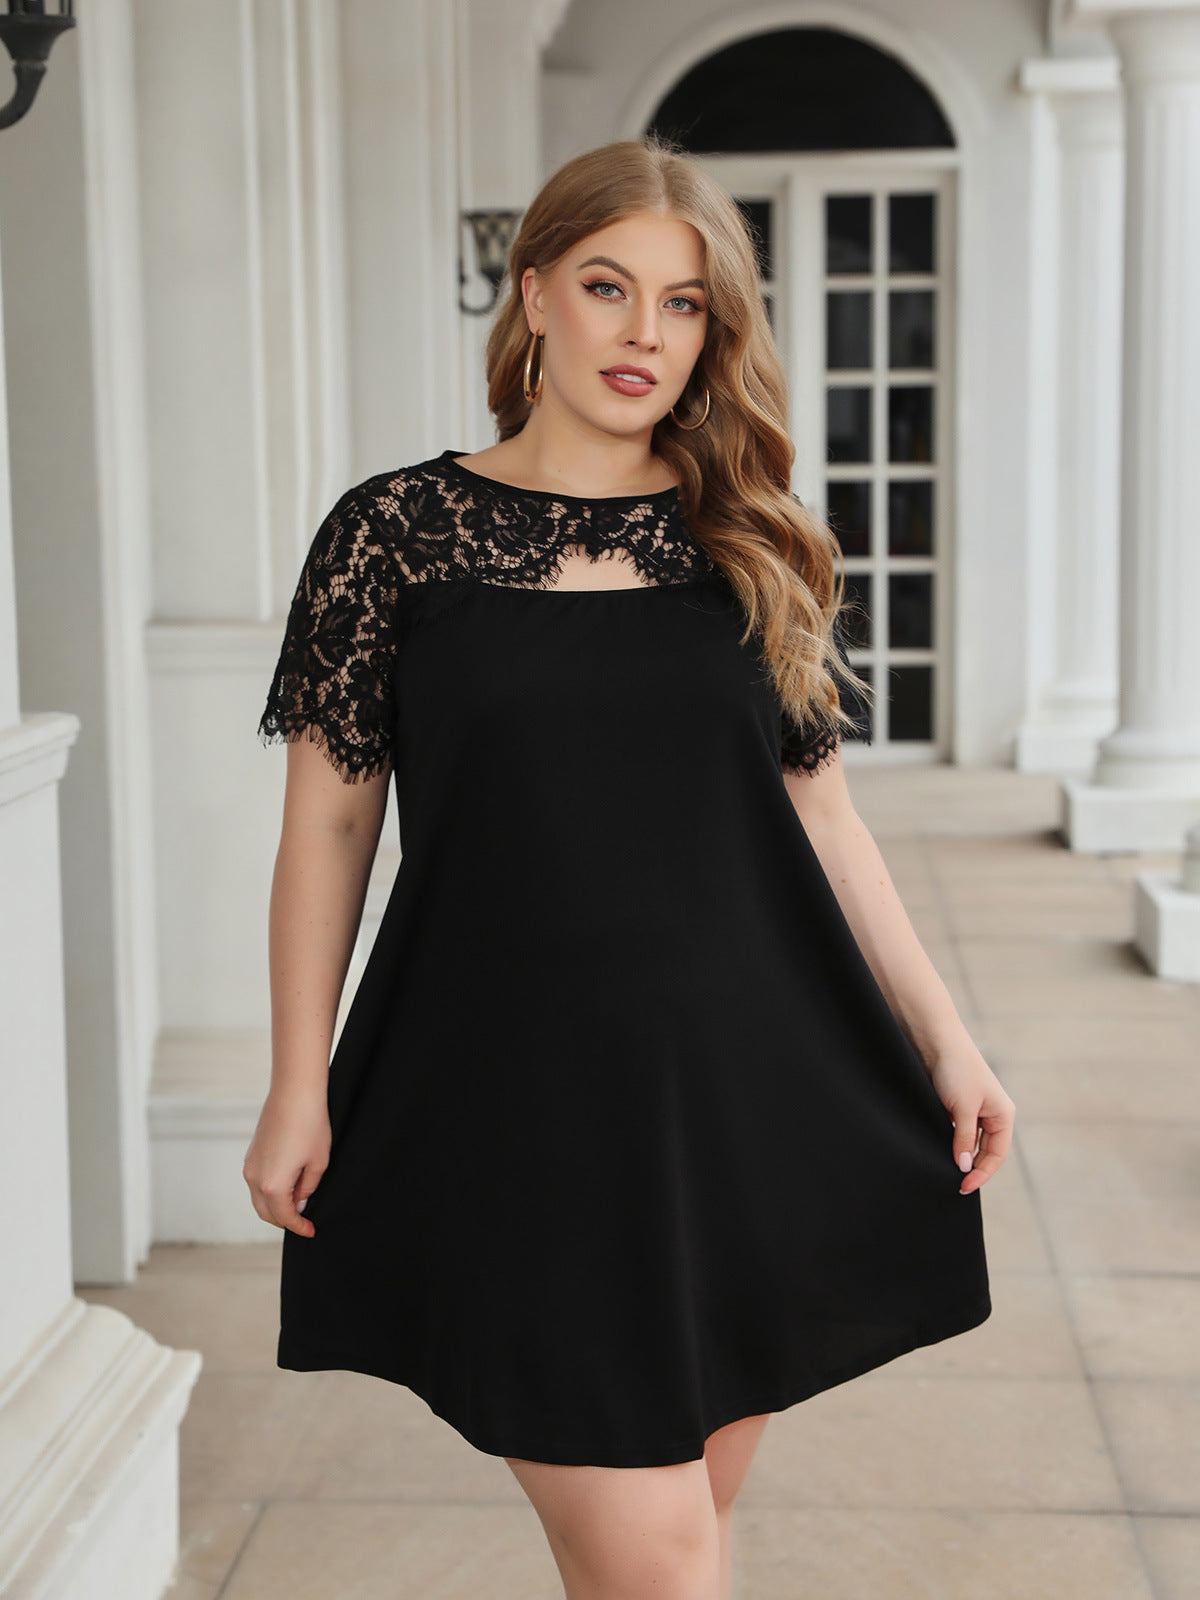 Plus Size Women's Lace A-line Dress: Elegant and Flattering - Ootddress